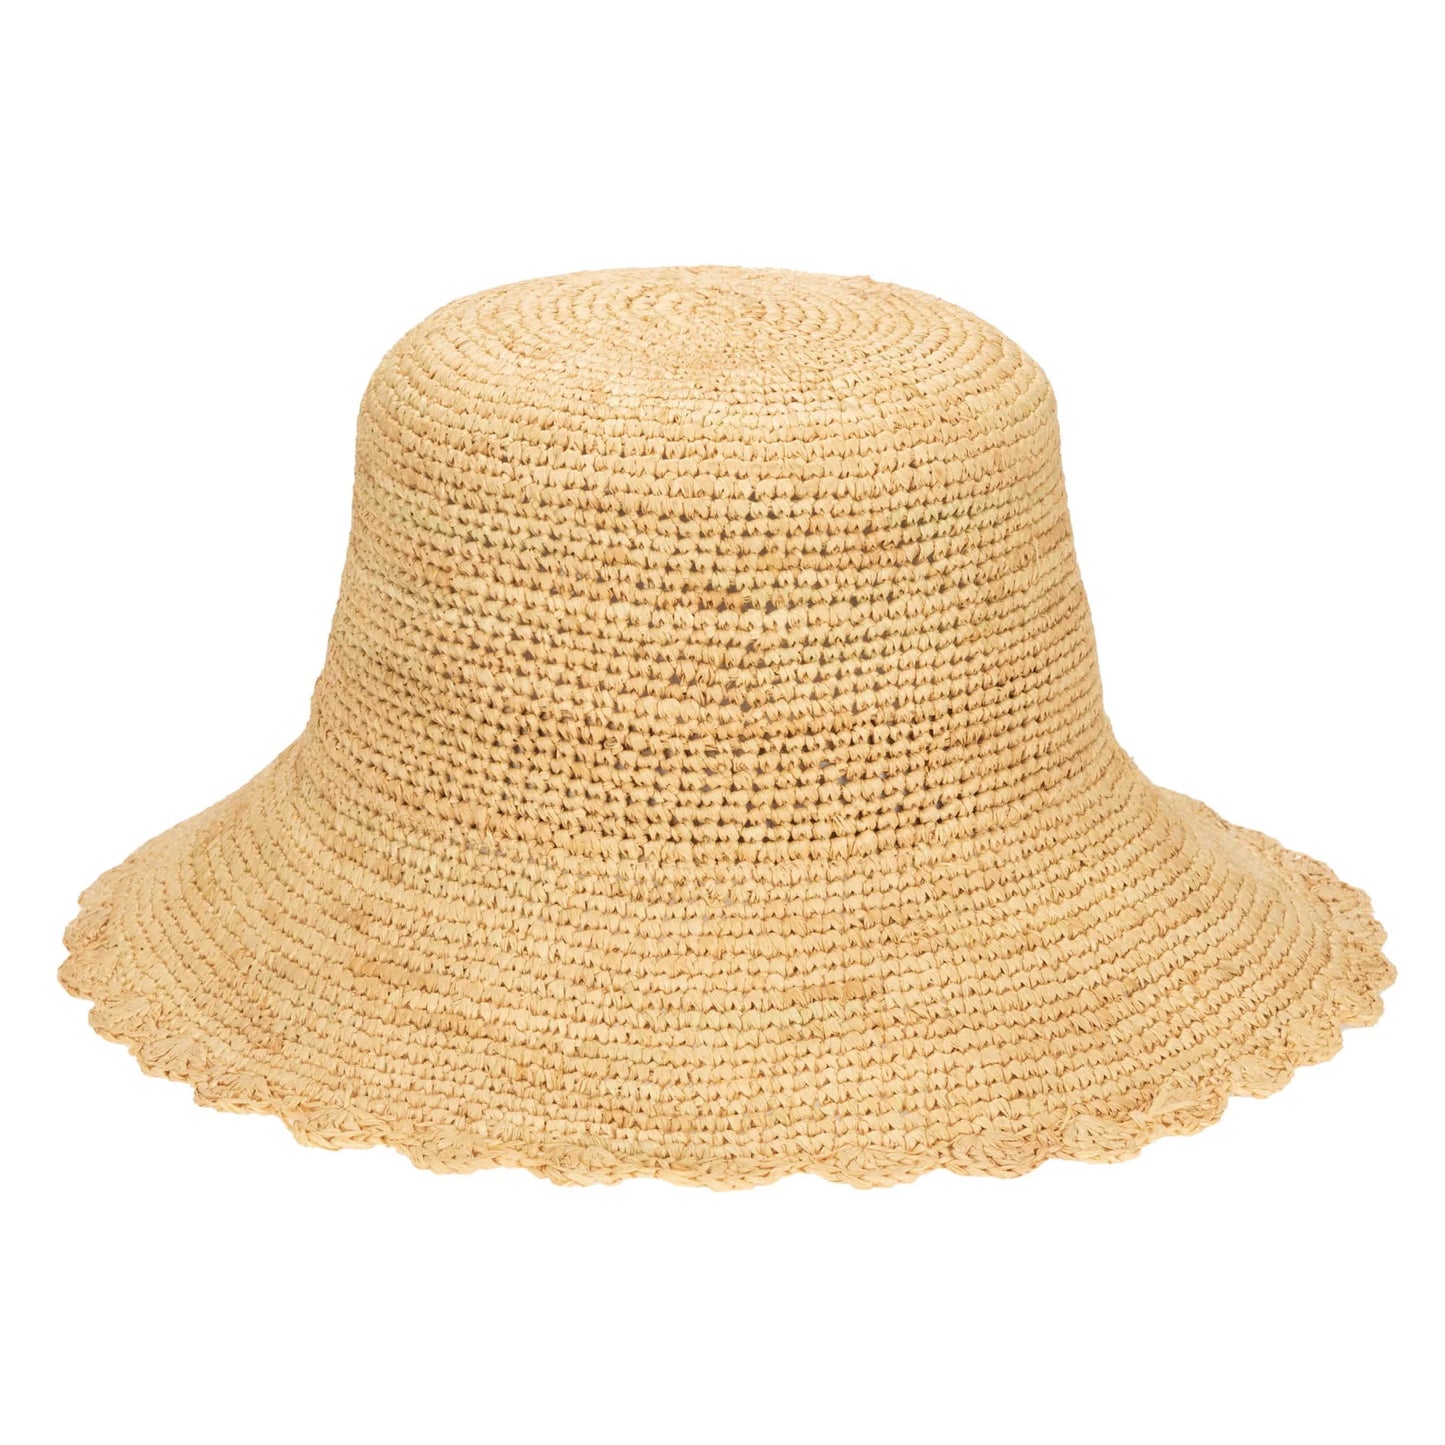 Sand Dollar - Hand Crochet Bucket Hat